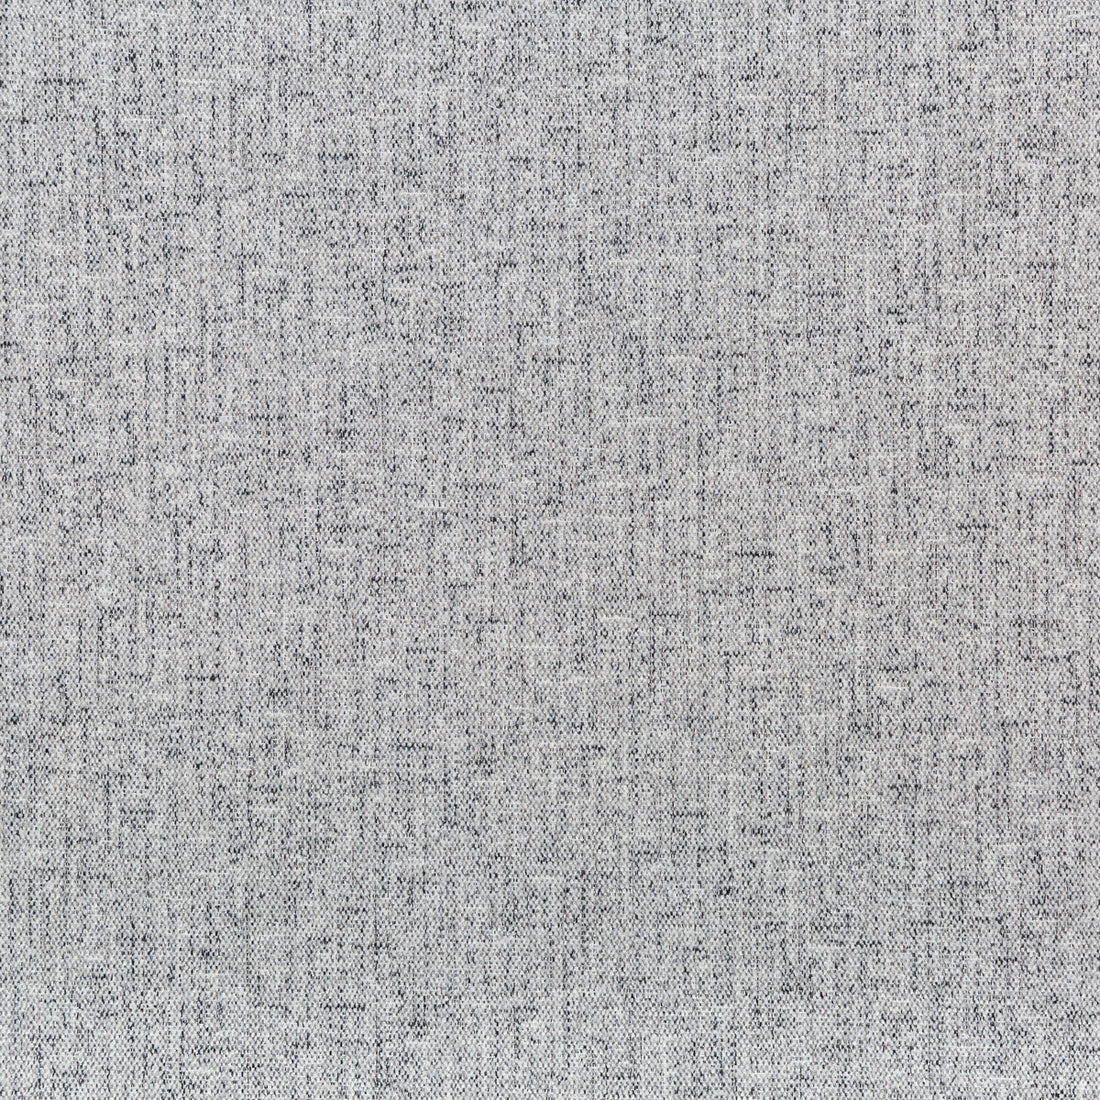 Kravet Smart fabric in 35927-11 color - pattern 35927.11.0 - by Kravet Smart in the Performance Kravetarmor collection